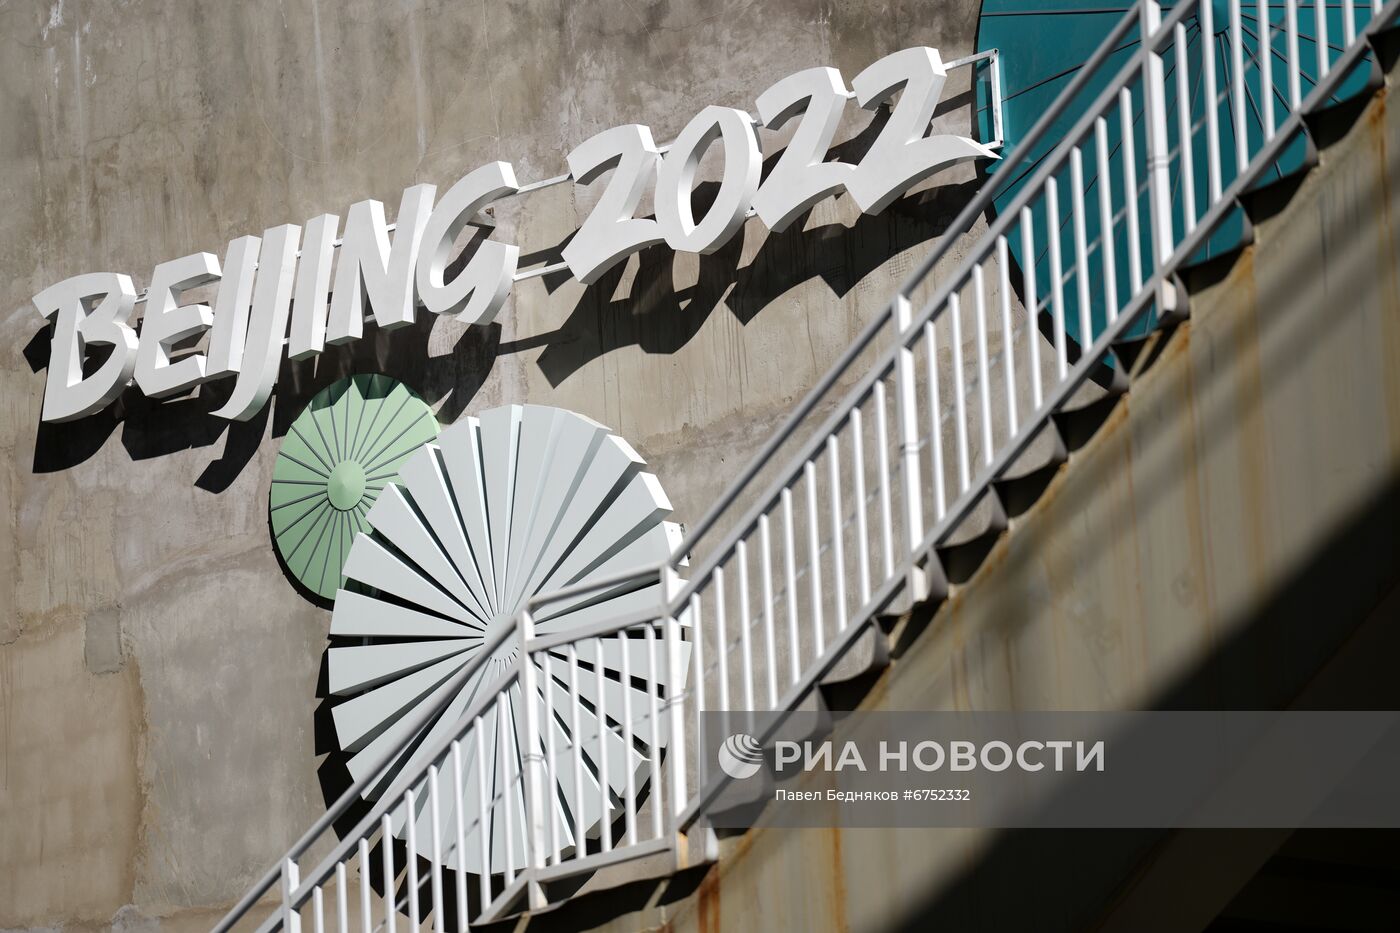 Олимпиада-2022. Работа главного пресс-центра